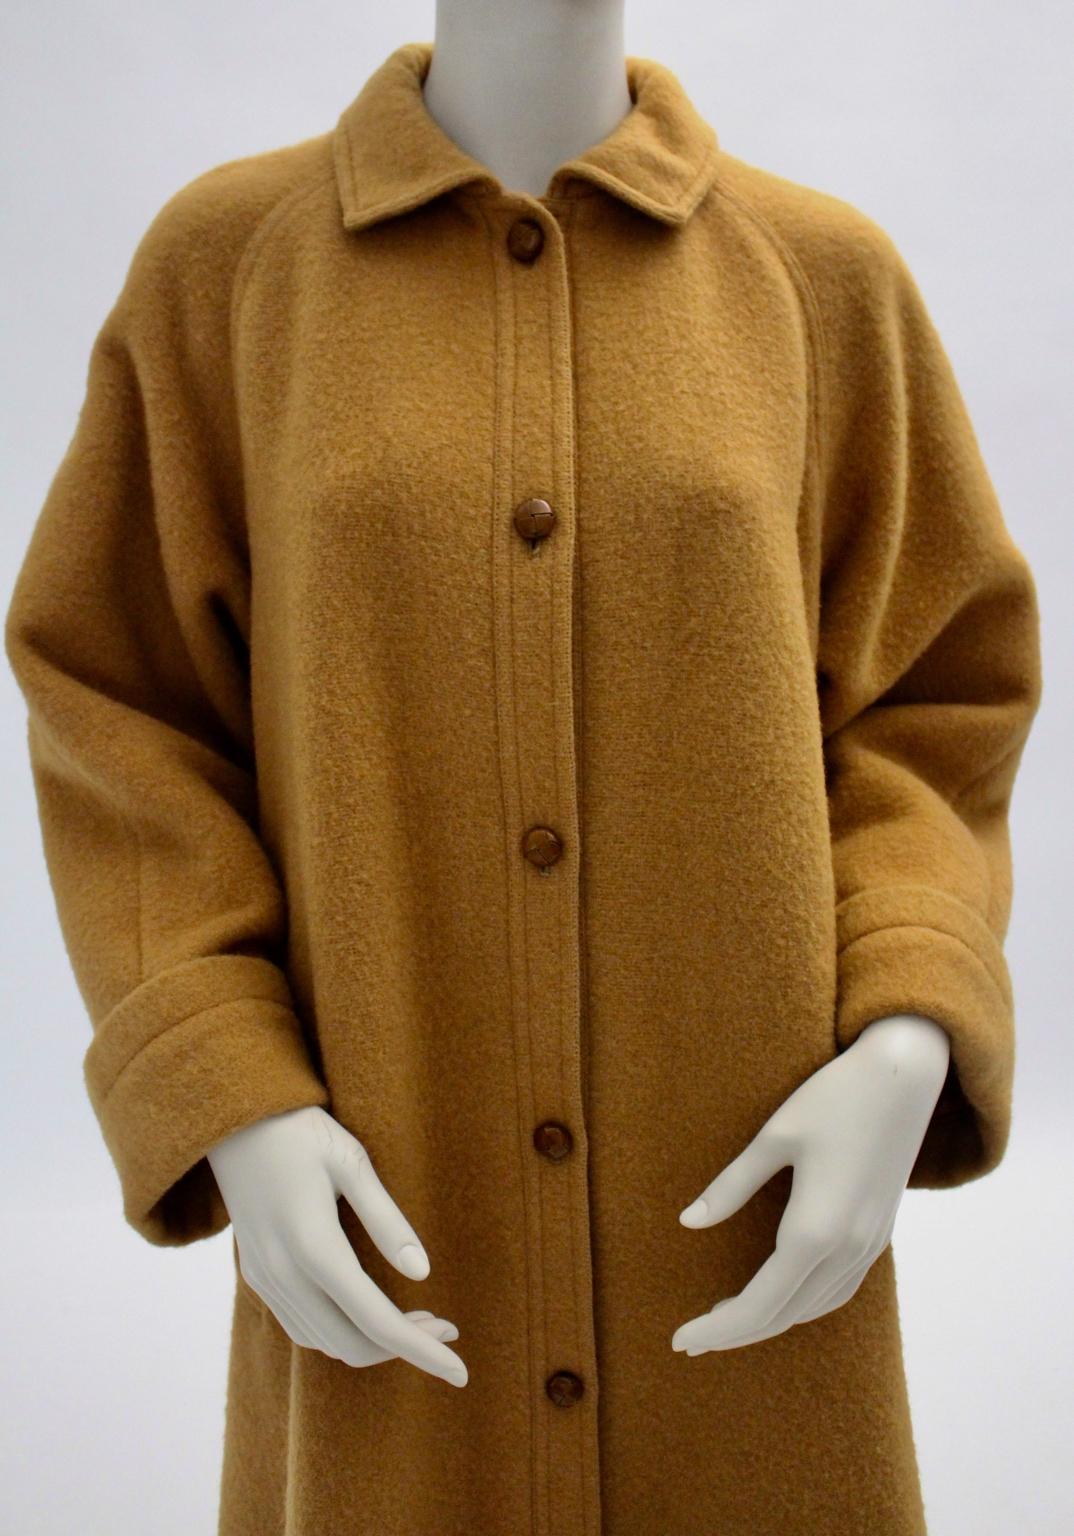 Guy Laroche Diffusion Paris Vintage Wool Coat 1970s For Sale 6